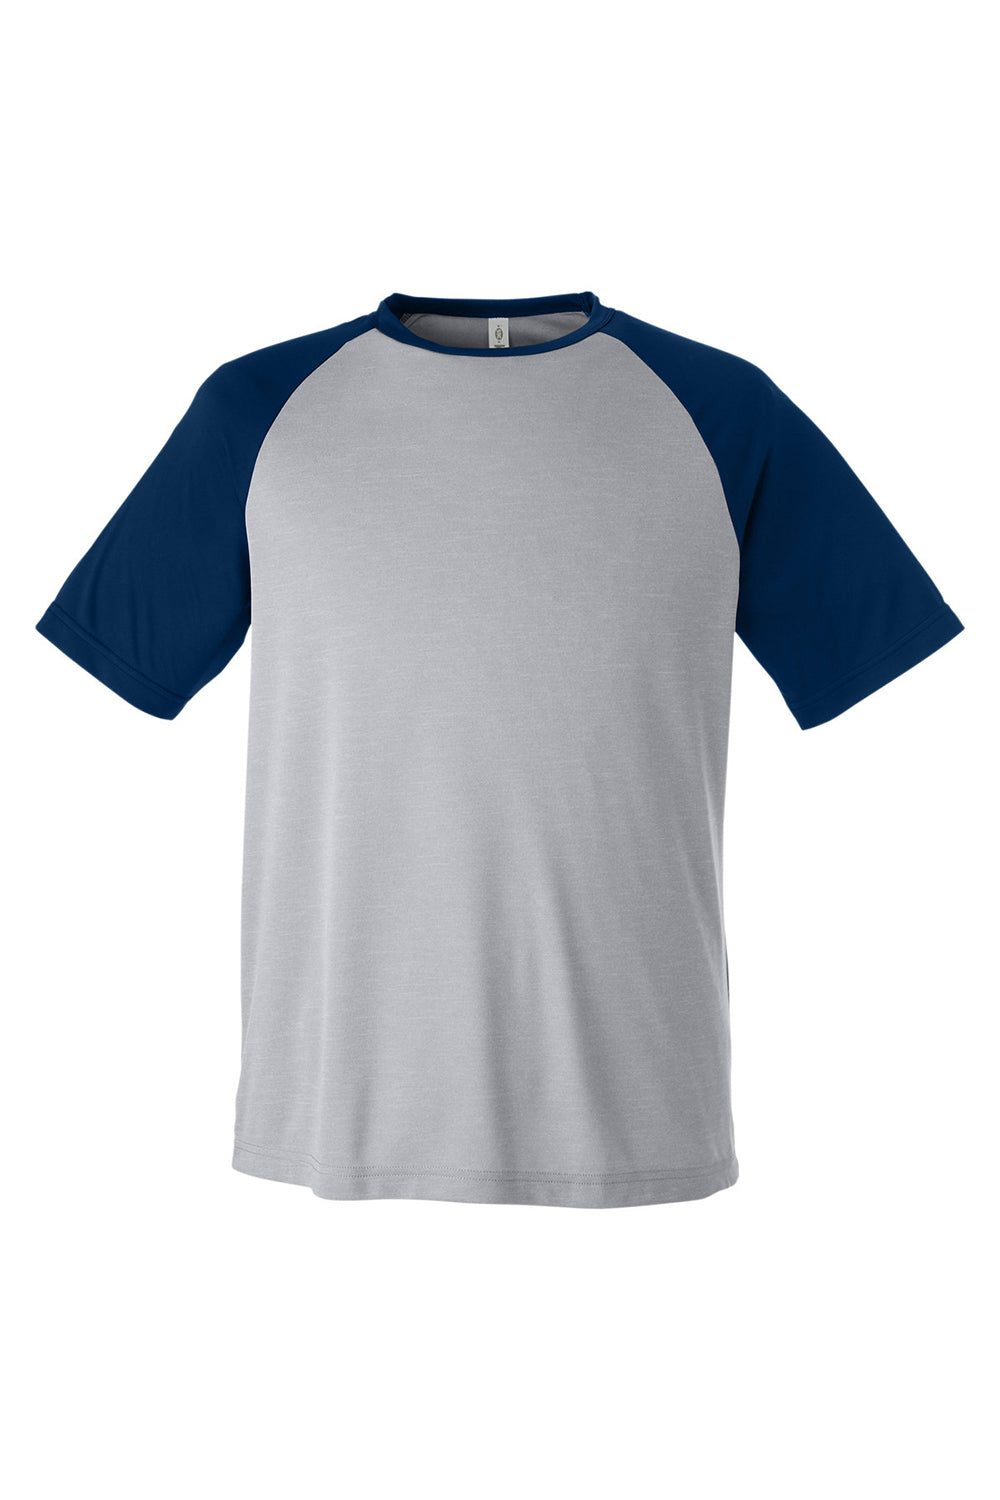 Team 365 TT62 Mens Zone Colorblock Moisture Wicking Short Sleeve Crewneck T-Shirt Heather Grey/Dark Navy Blue Flat Front